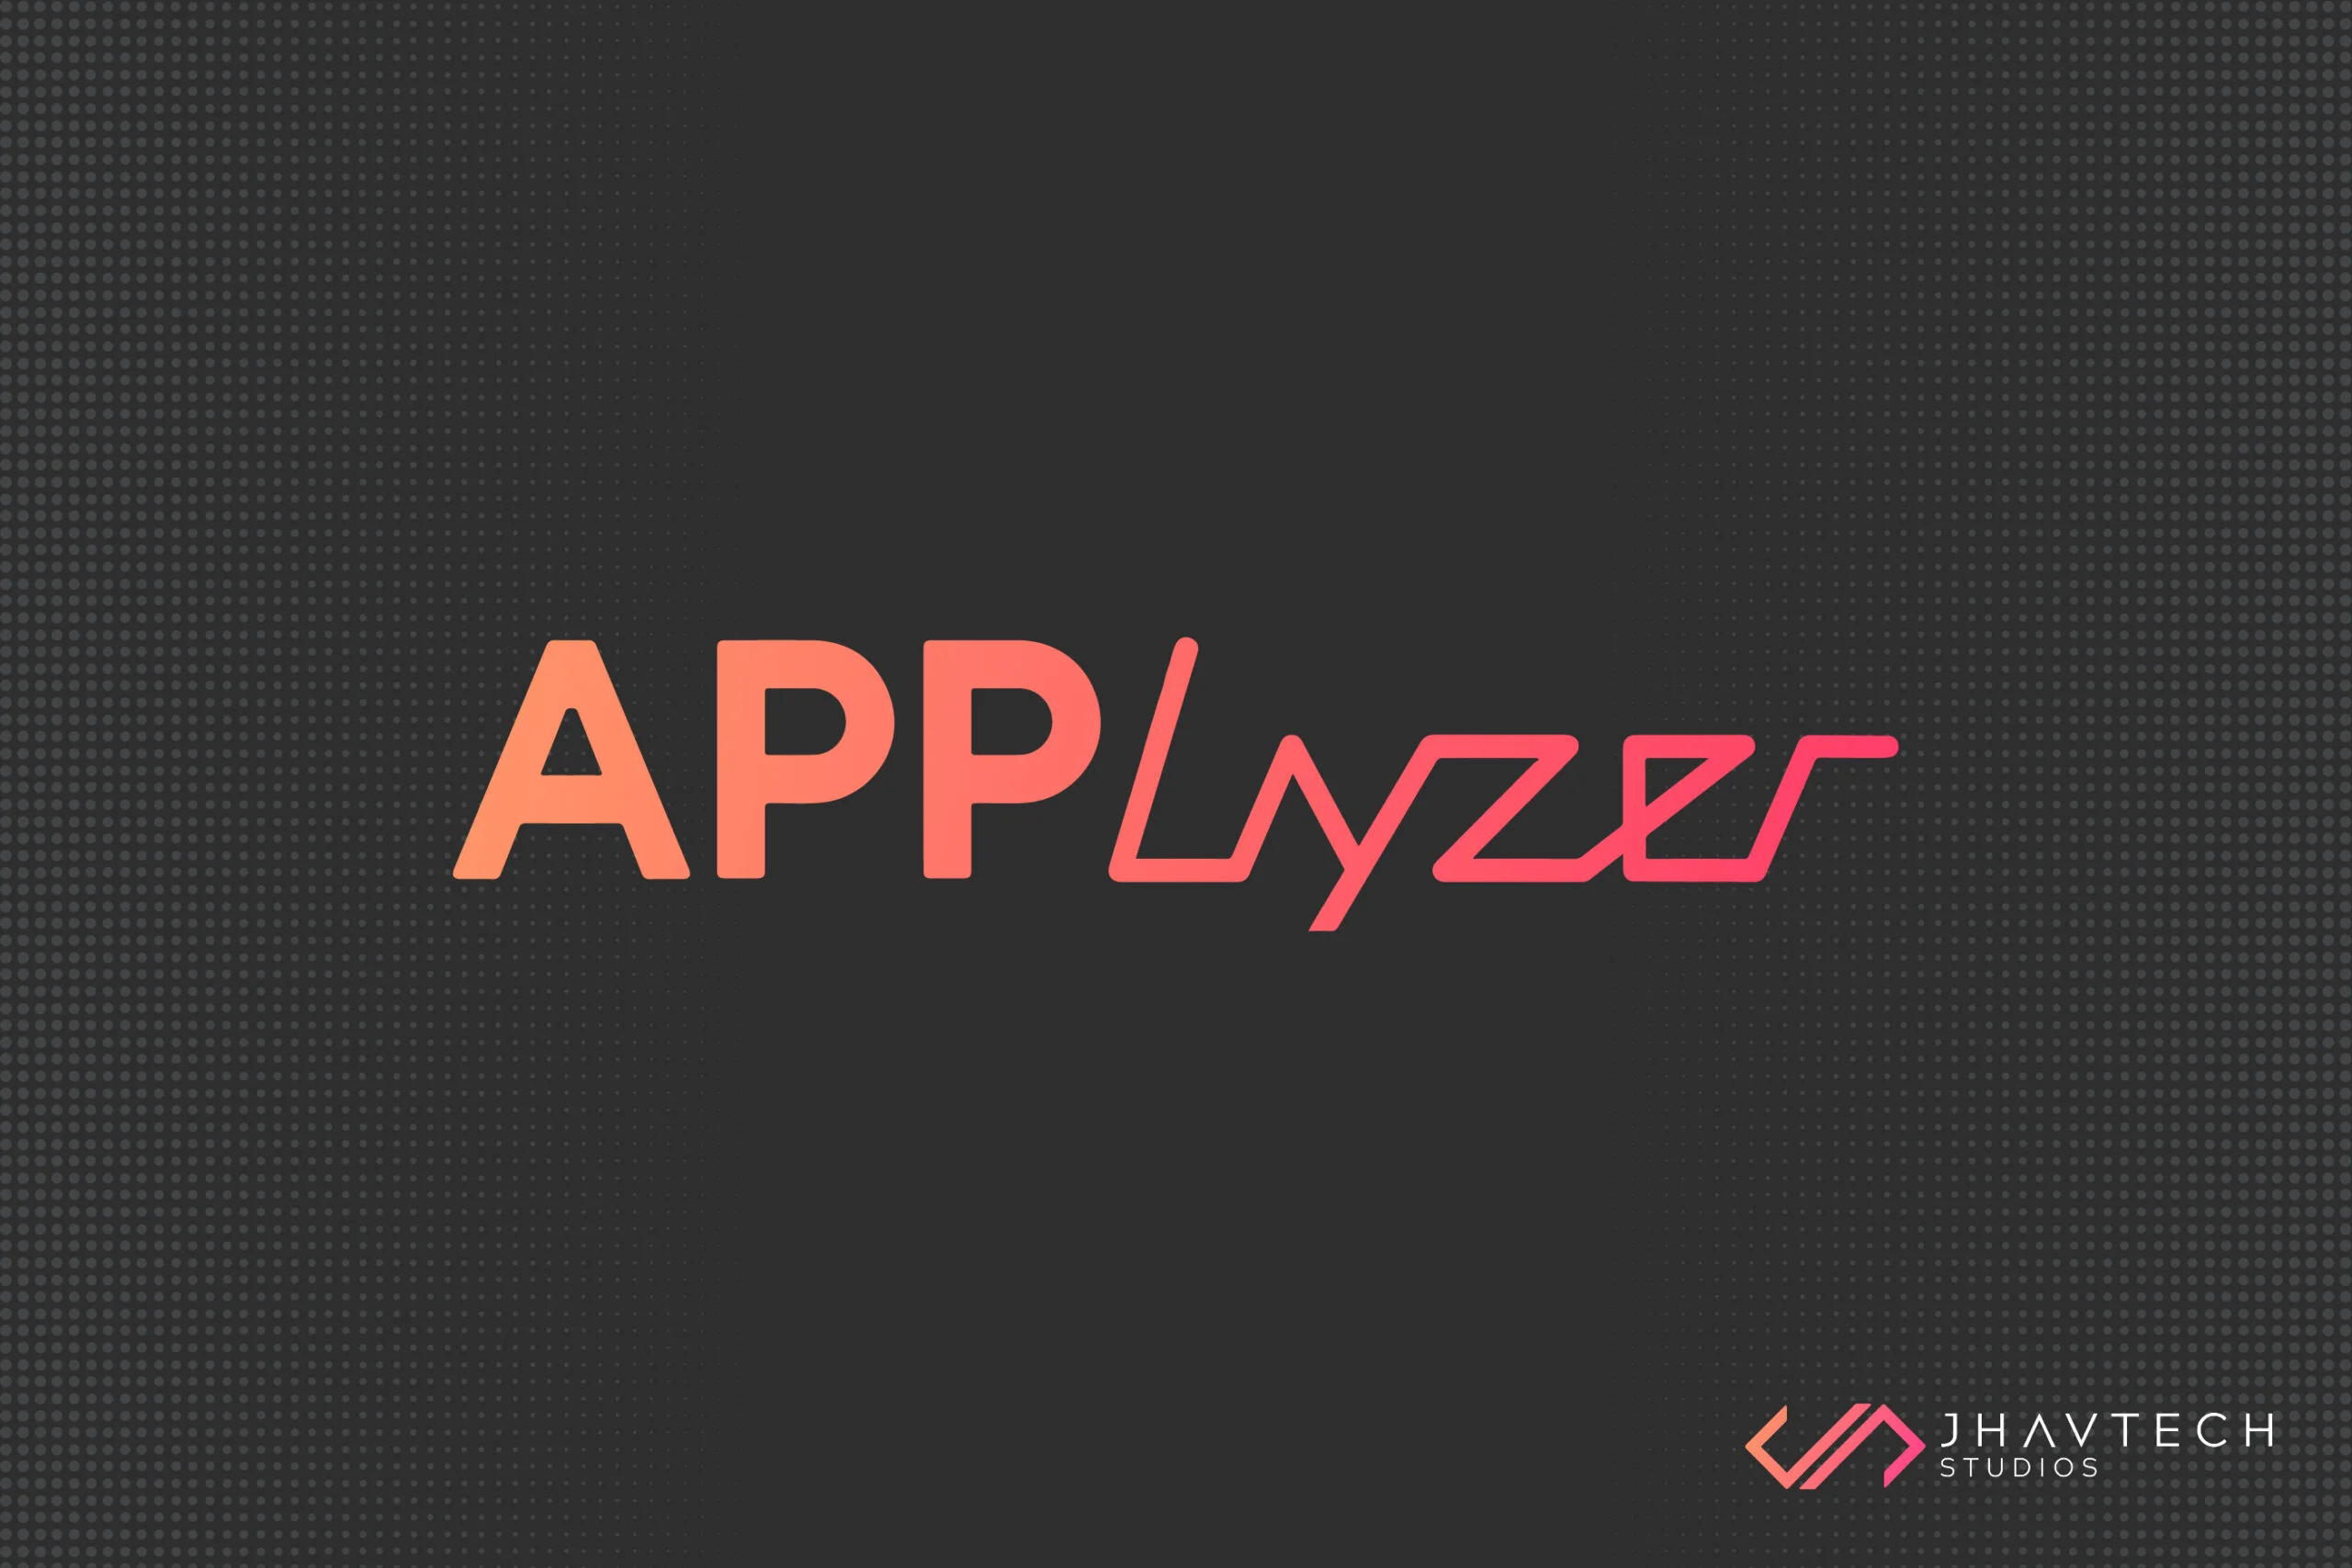 Top 5 iOS App Development Tools in 2023 - APPlyzer